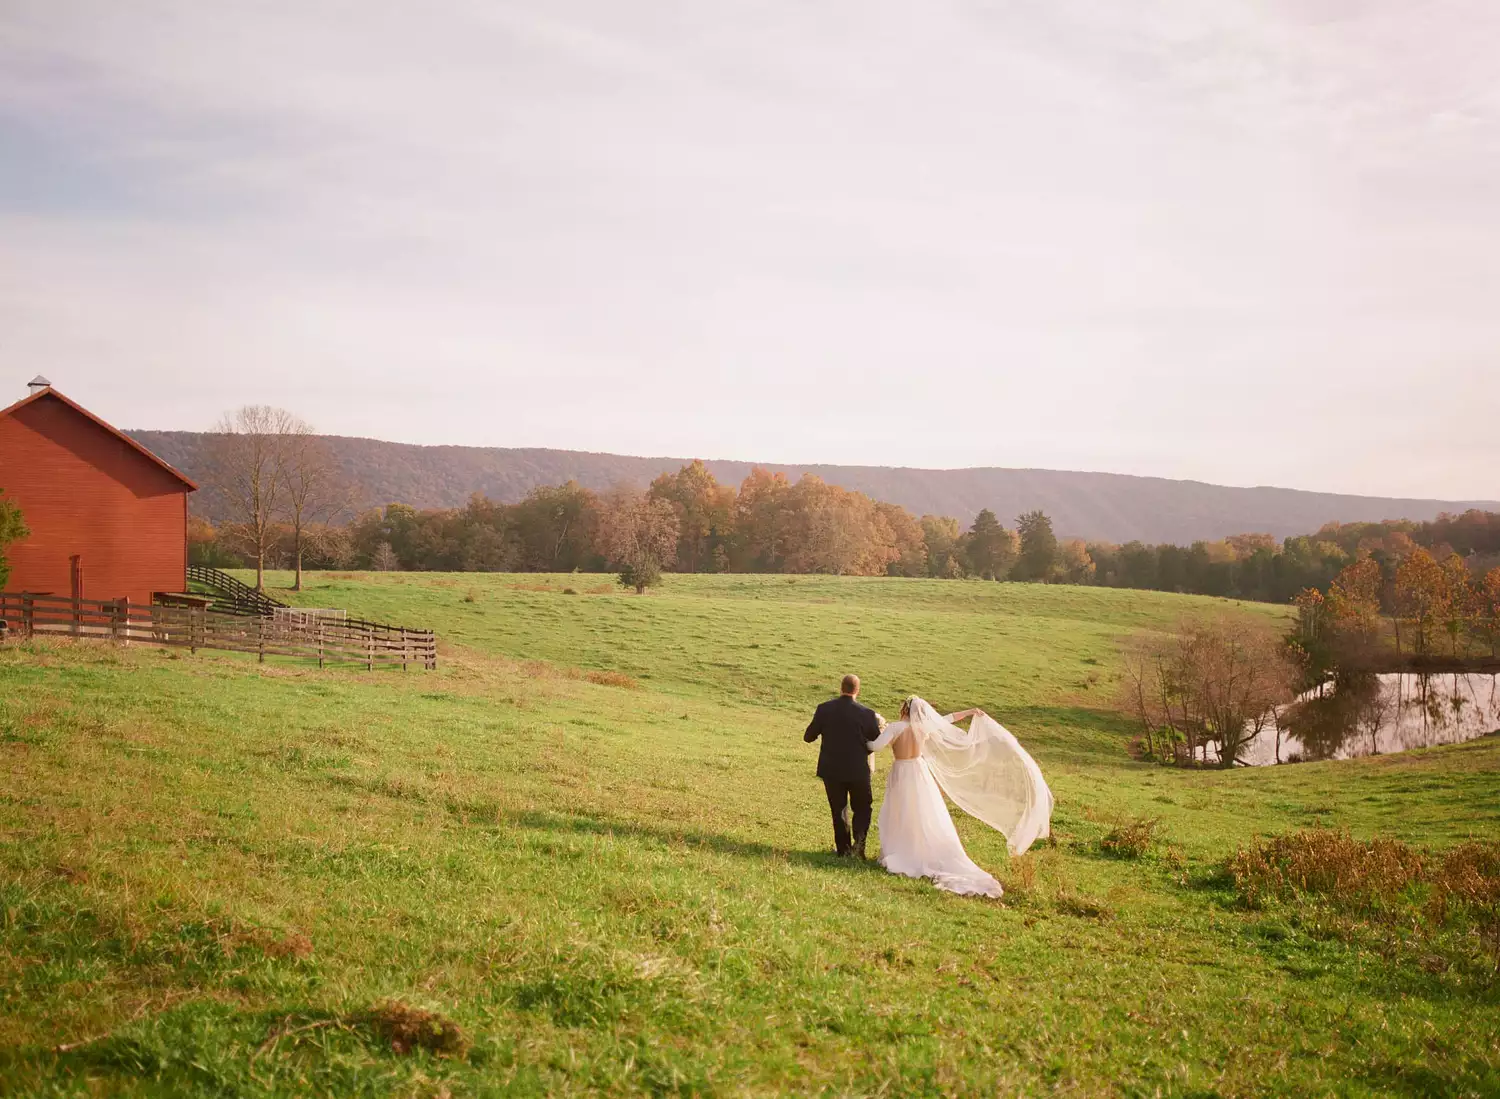 Bride and groom walking across a field on a farm during a rustic farm wedding.